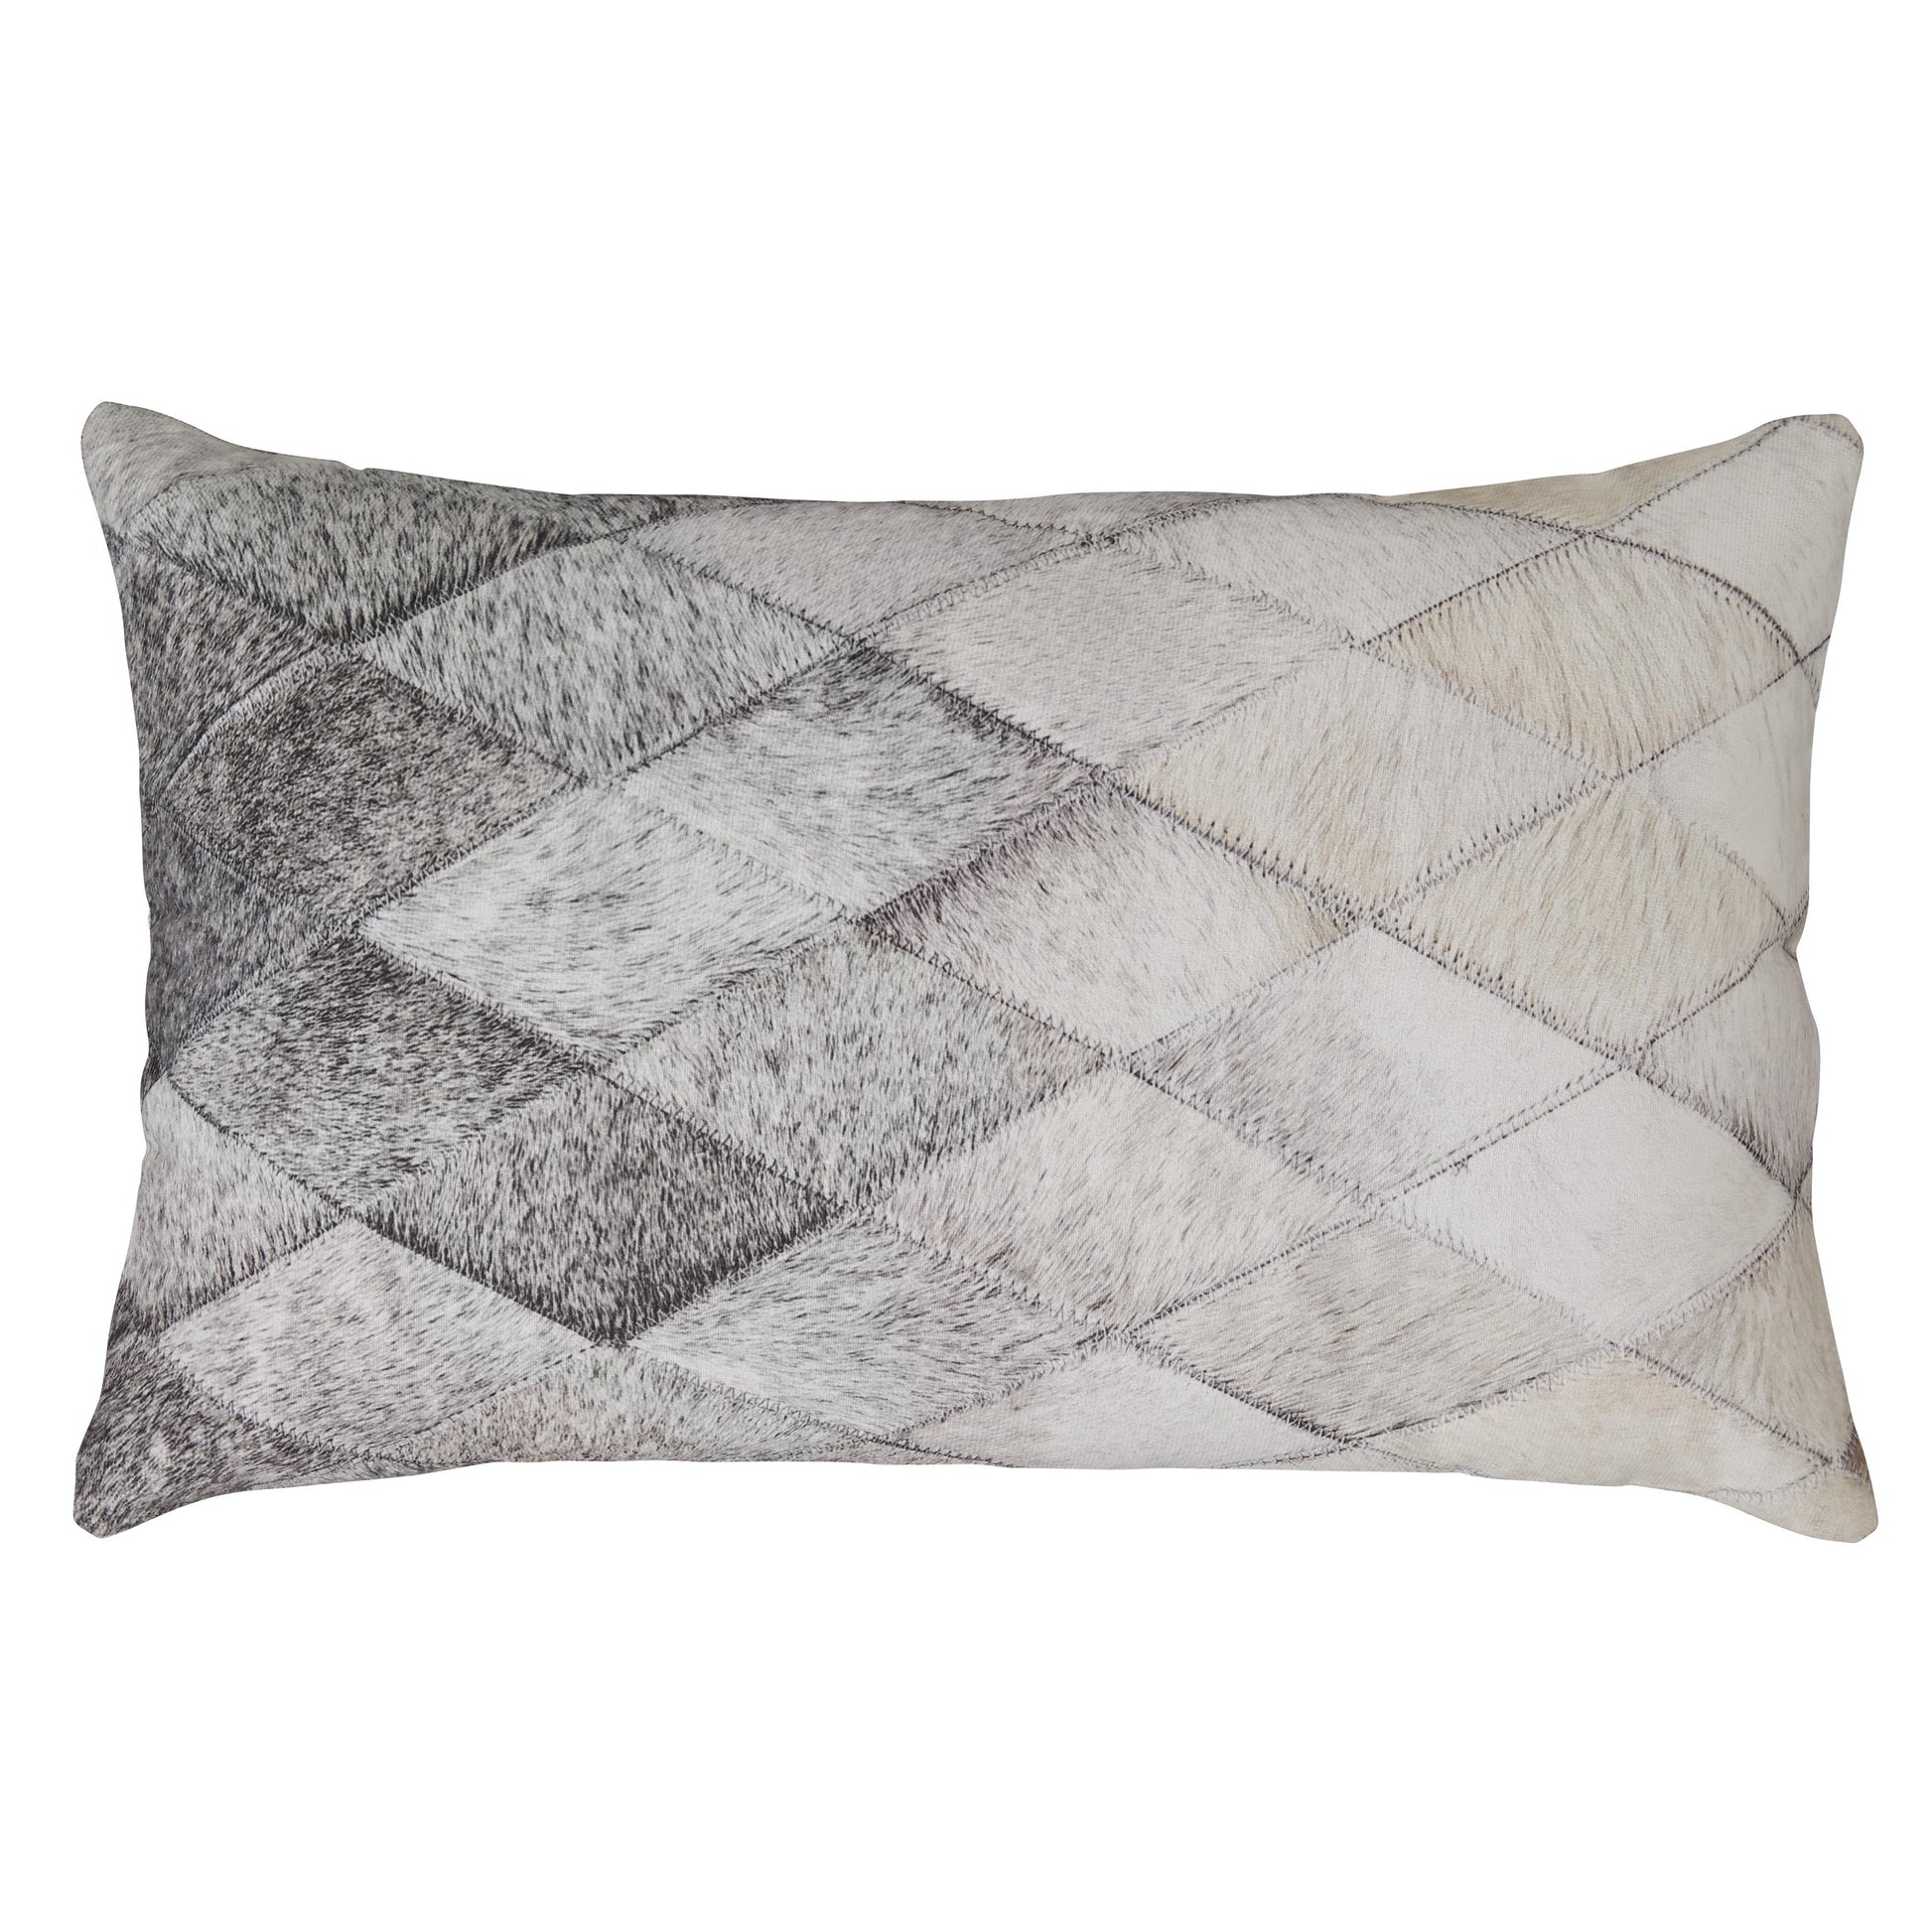 Signature Design by Ashley Decorative Pillows Decorative Pillows A1000930 IMAGE 1